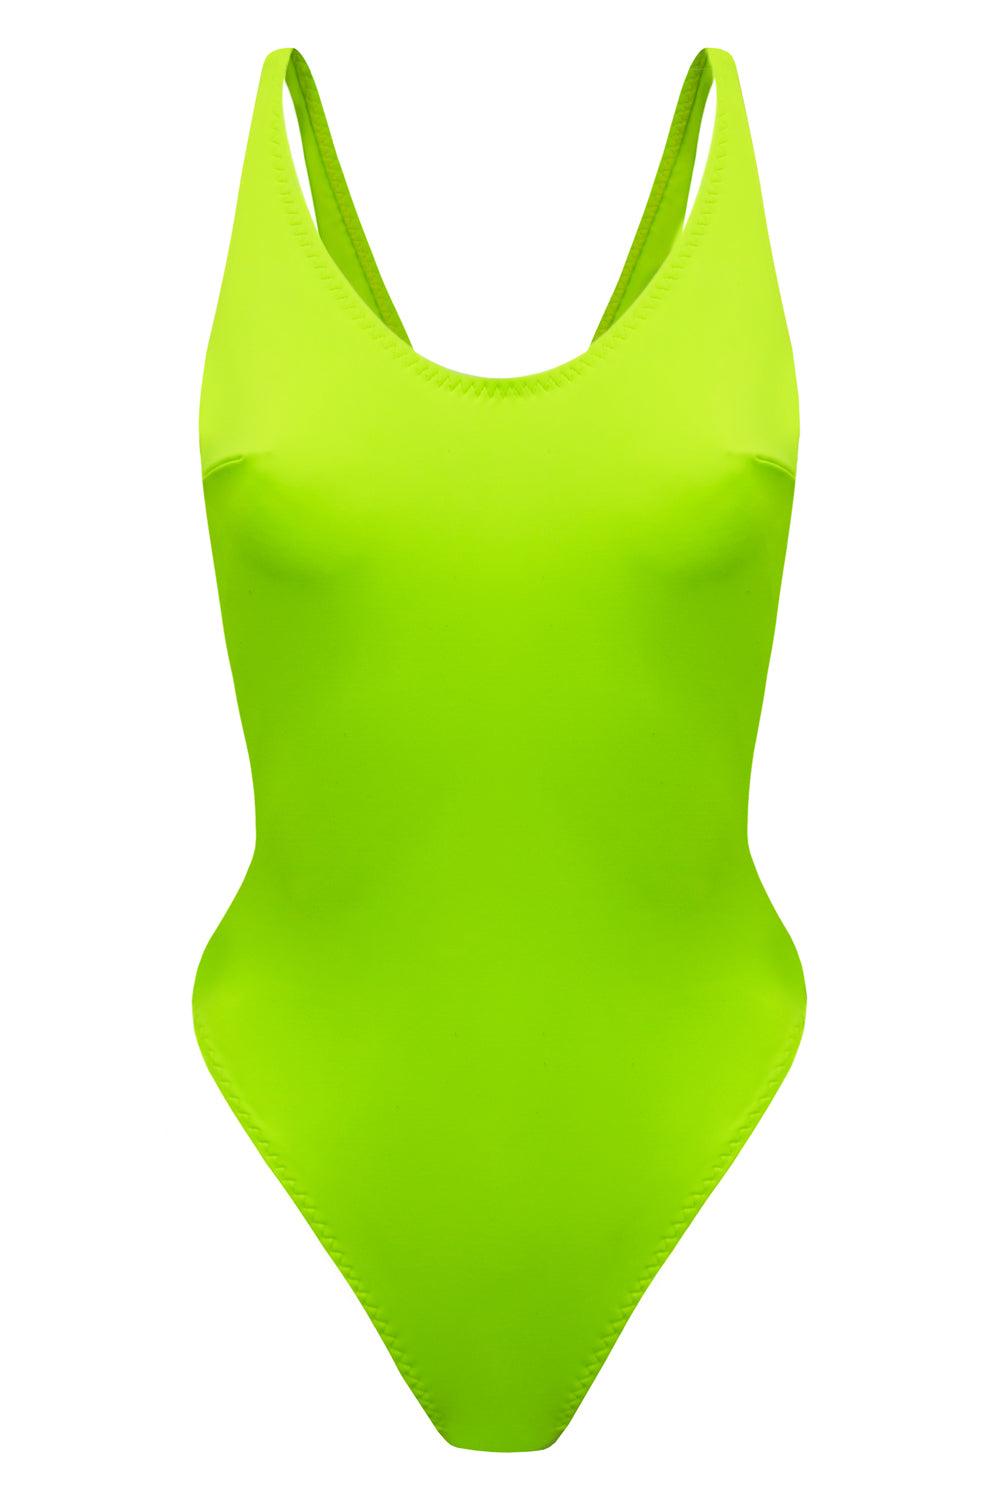 Mediana Greenery swimsuit - One Piece swimsuit by yesUndress. Shop on yesUndress